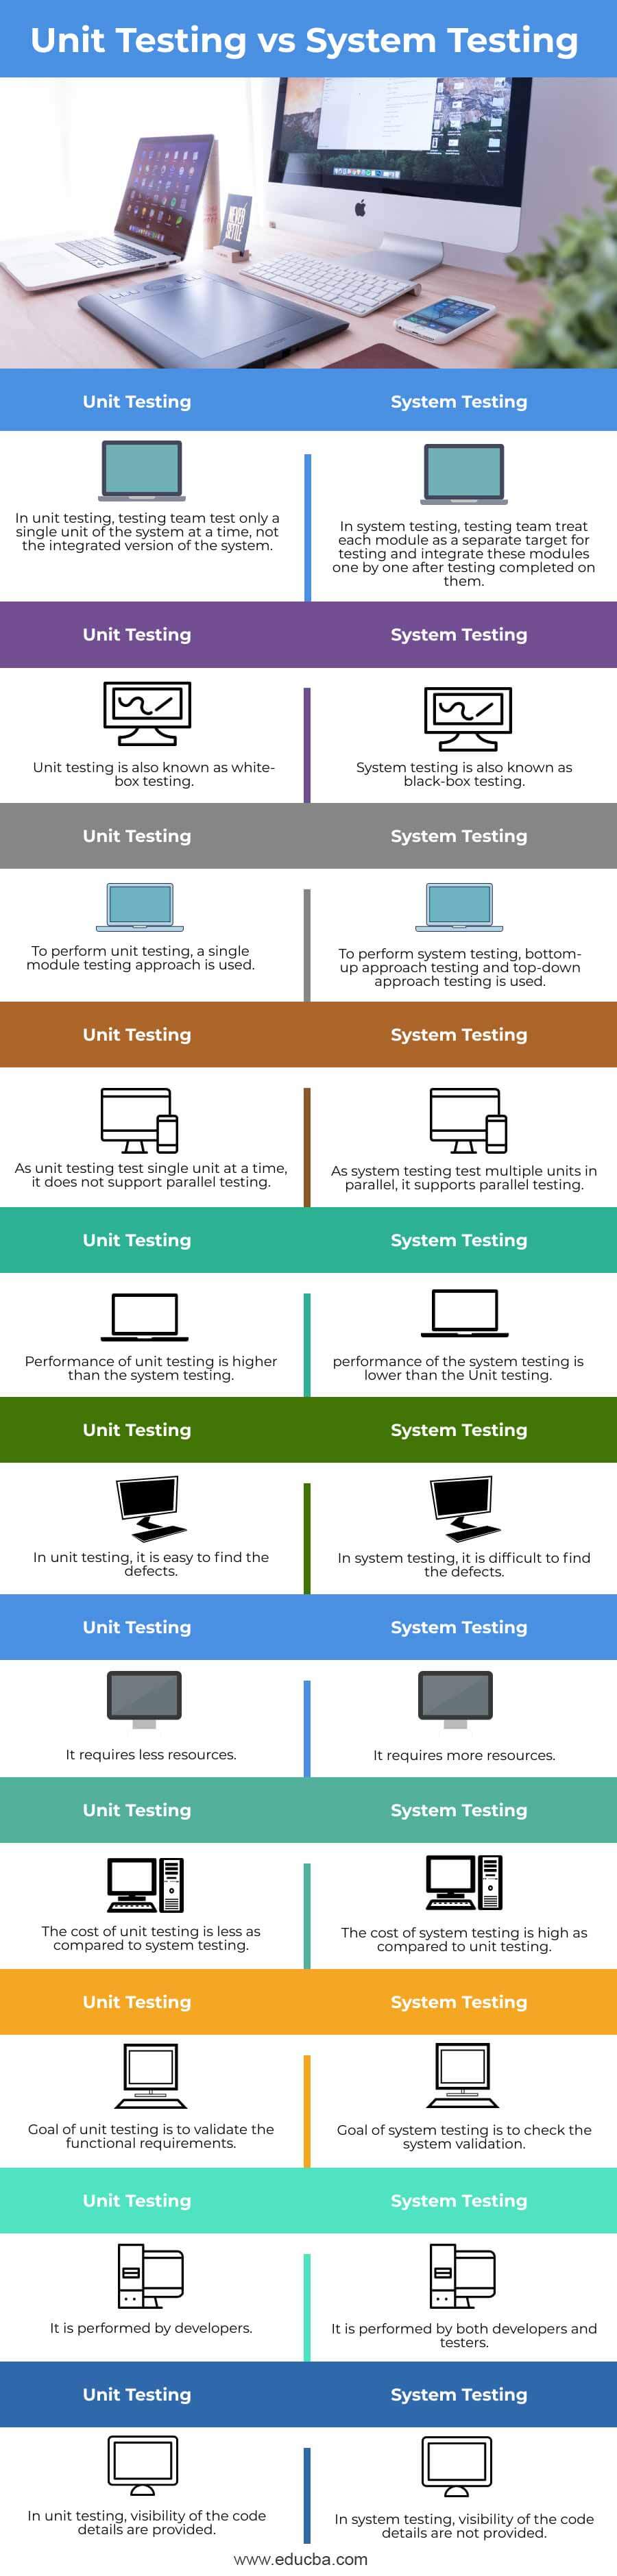 Unit-Testing-vs-System-Testing-info